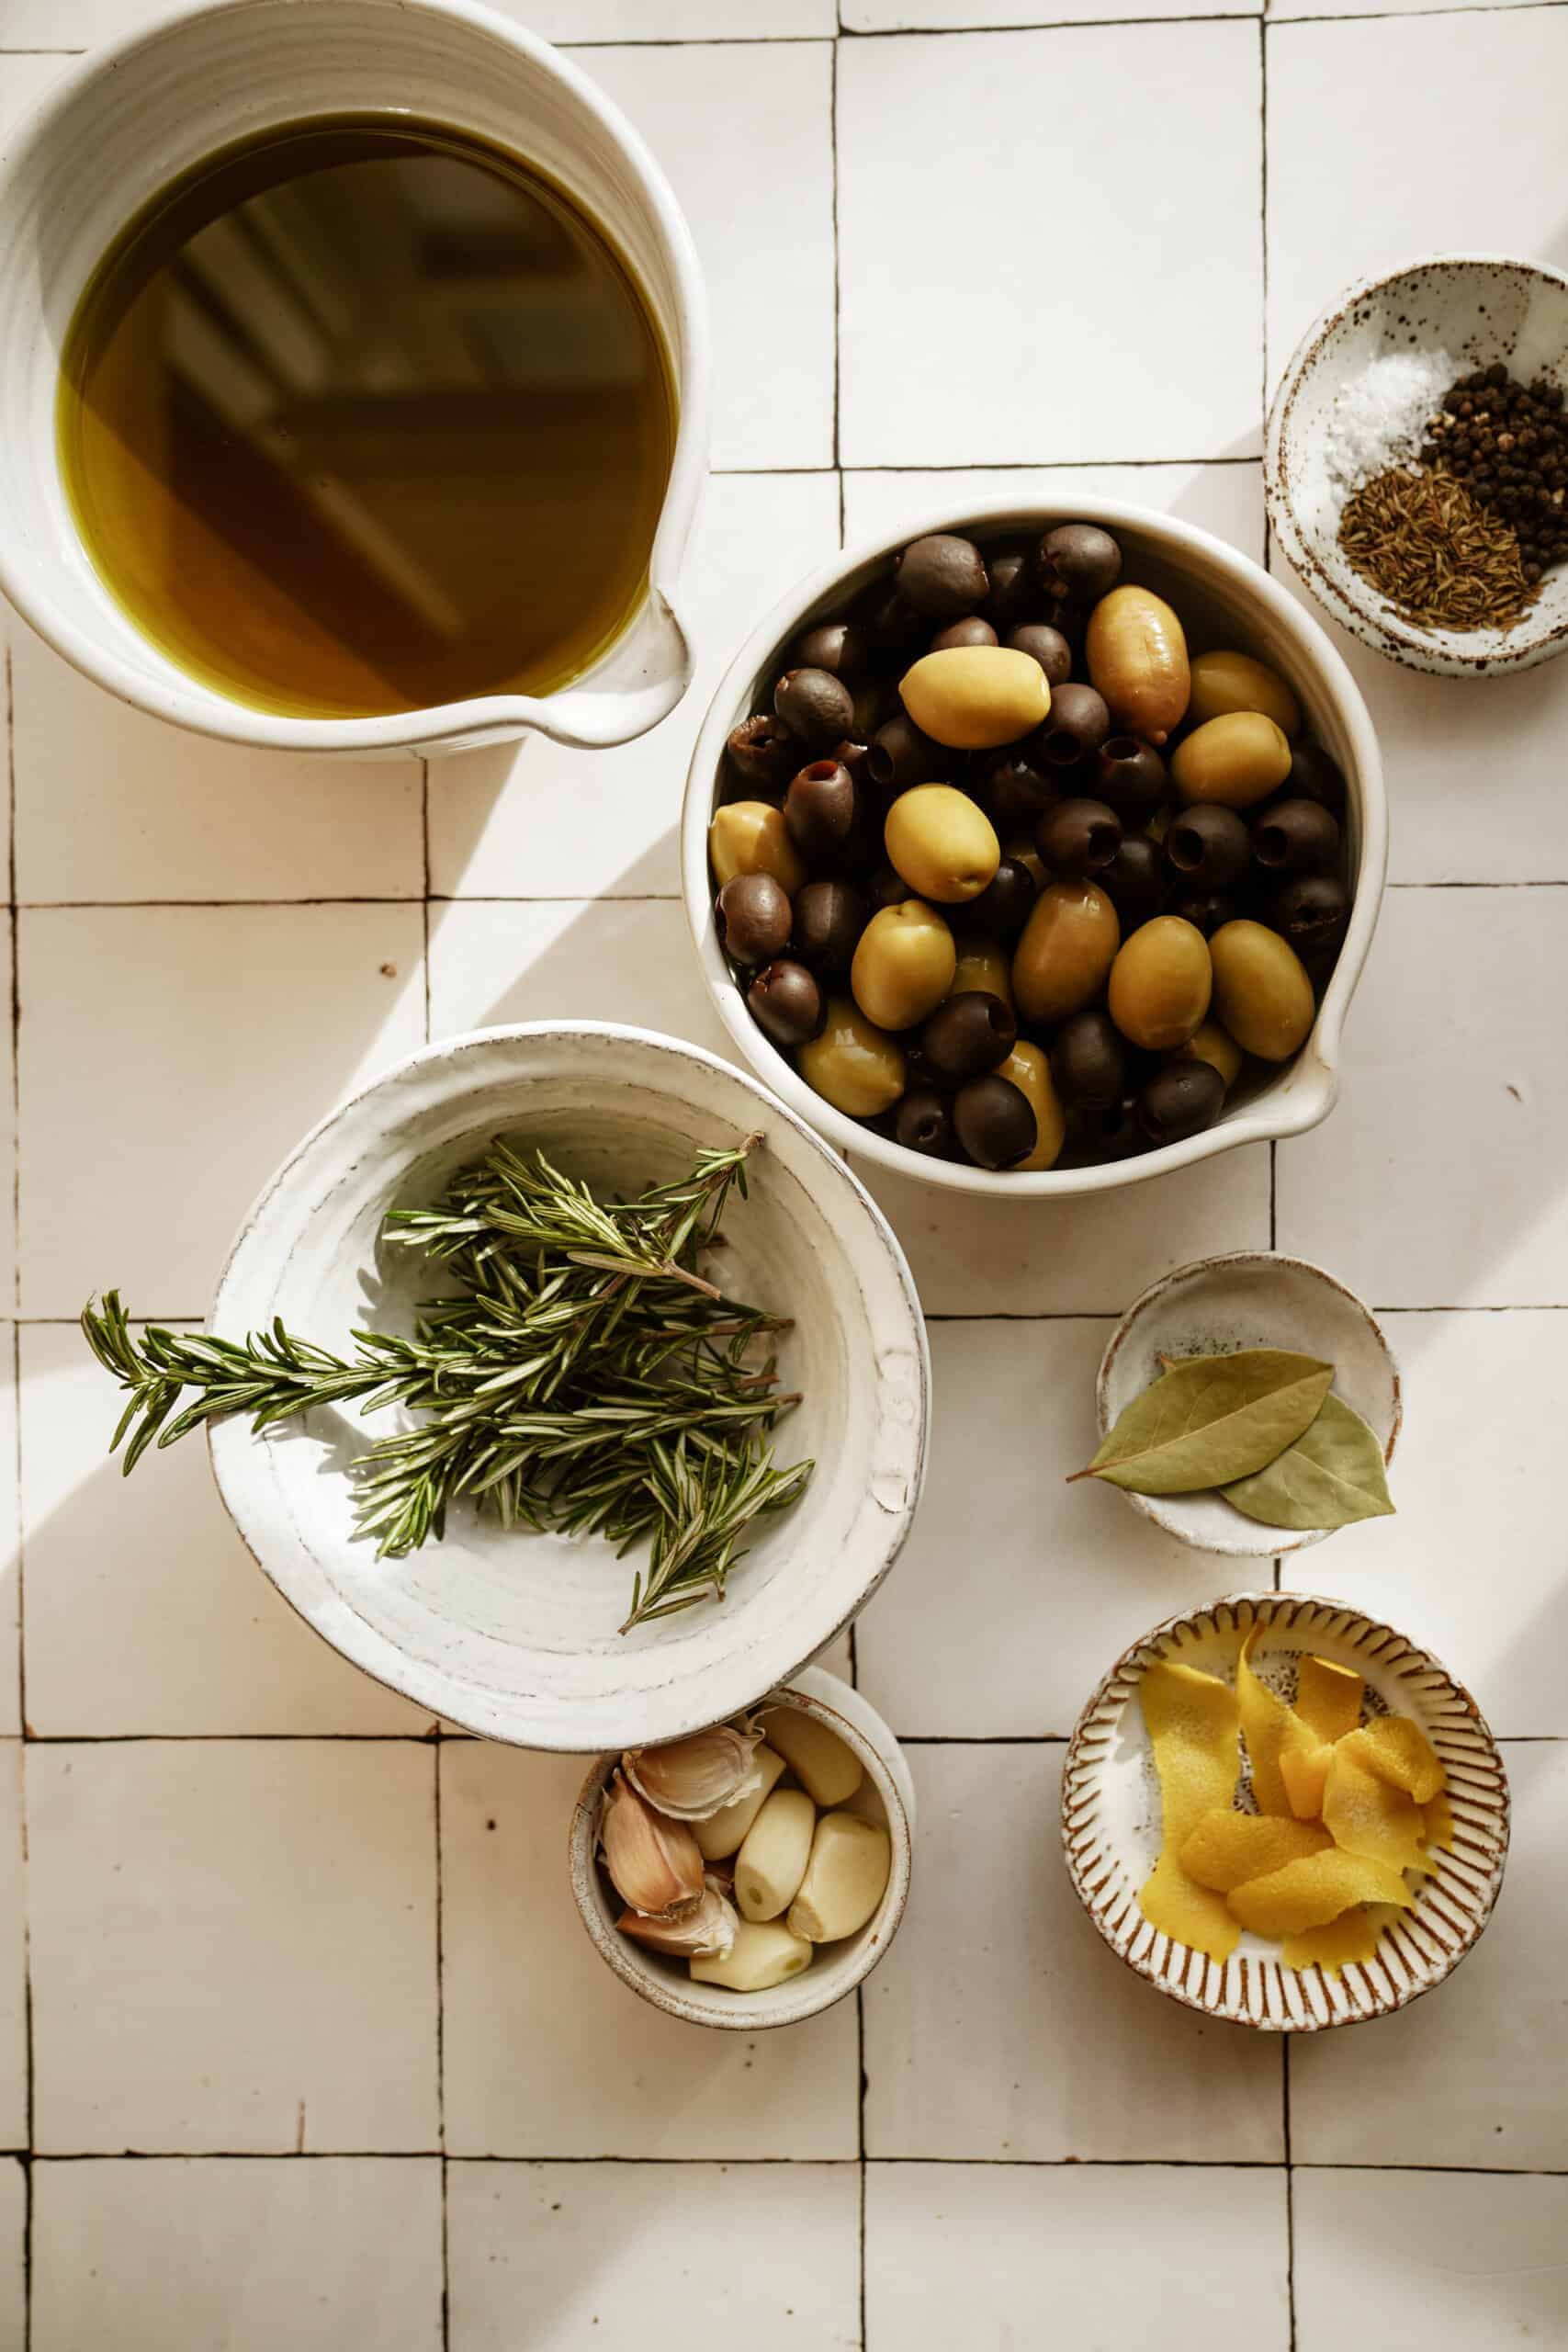 marinated olive ingredients